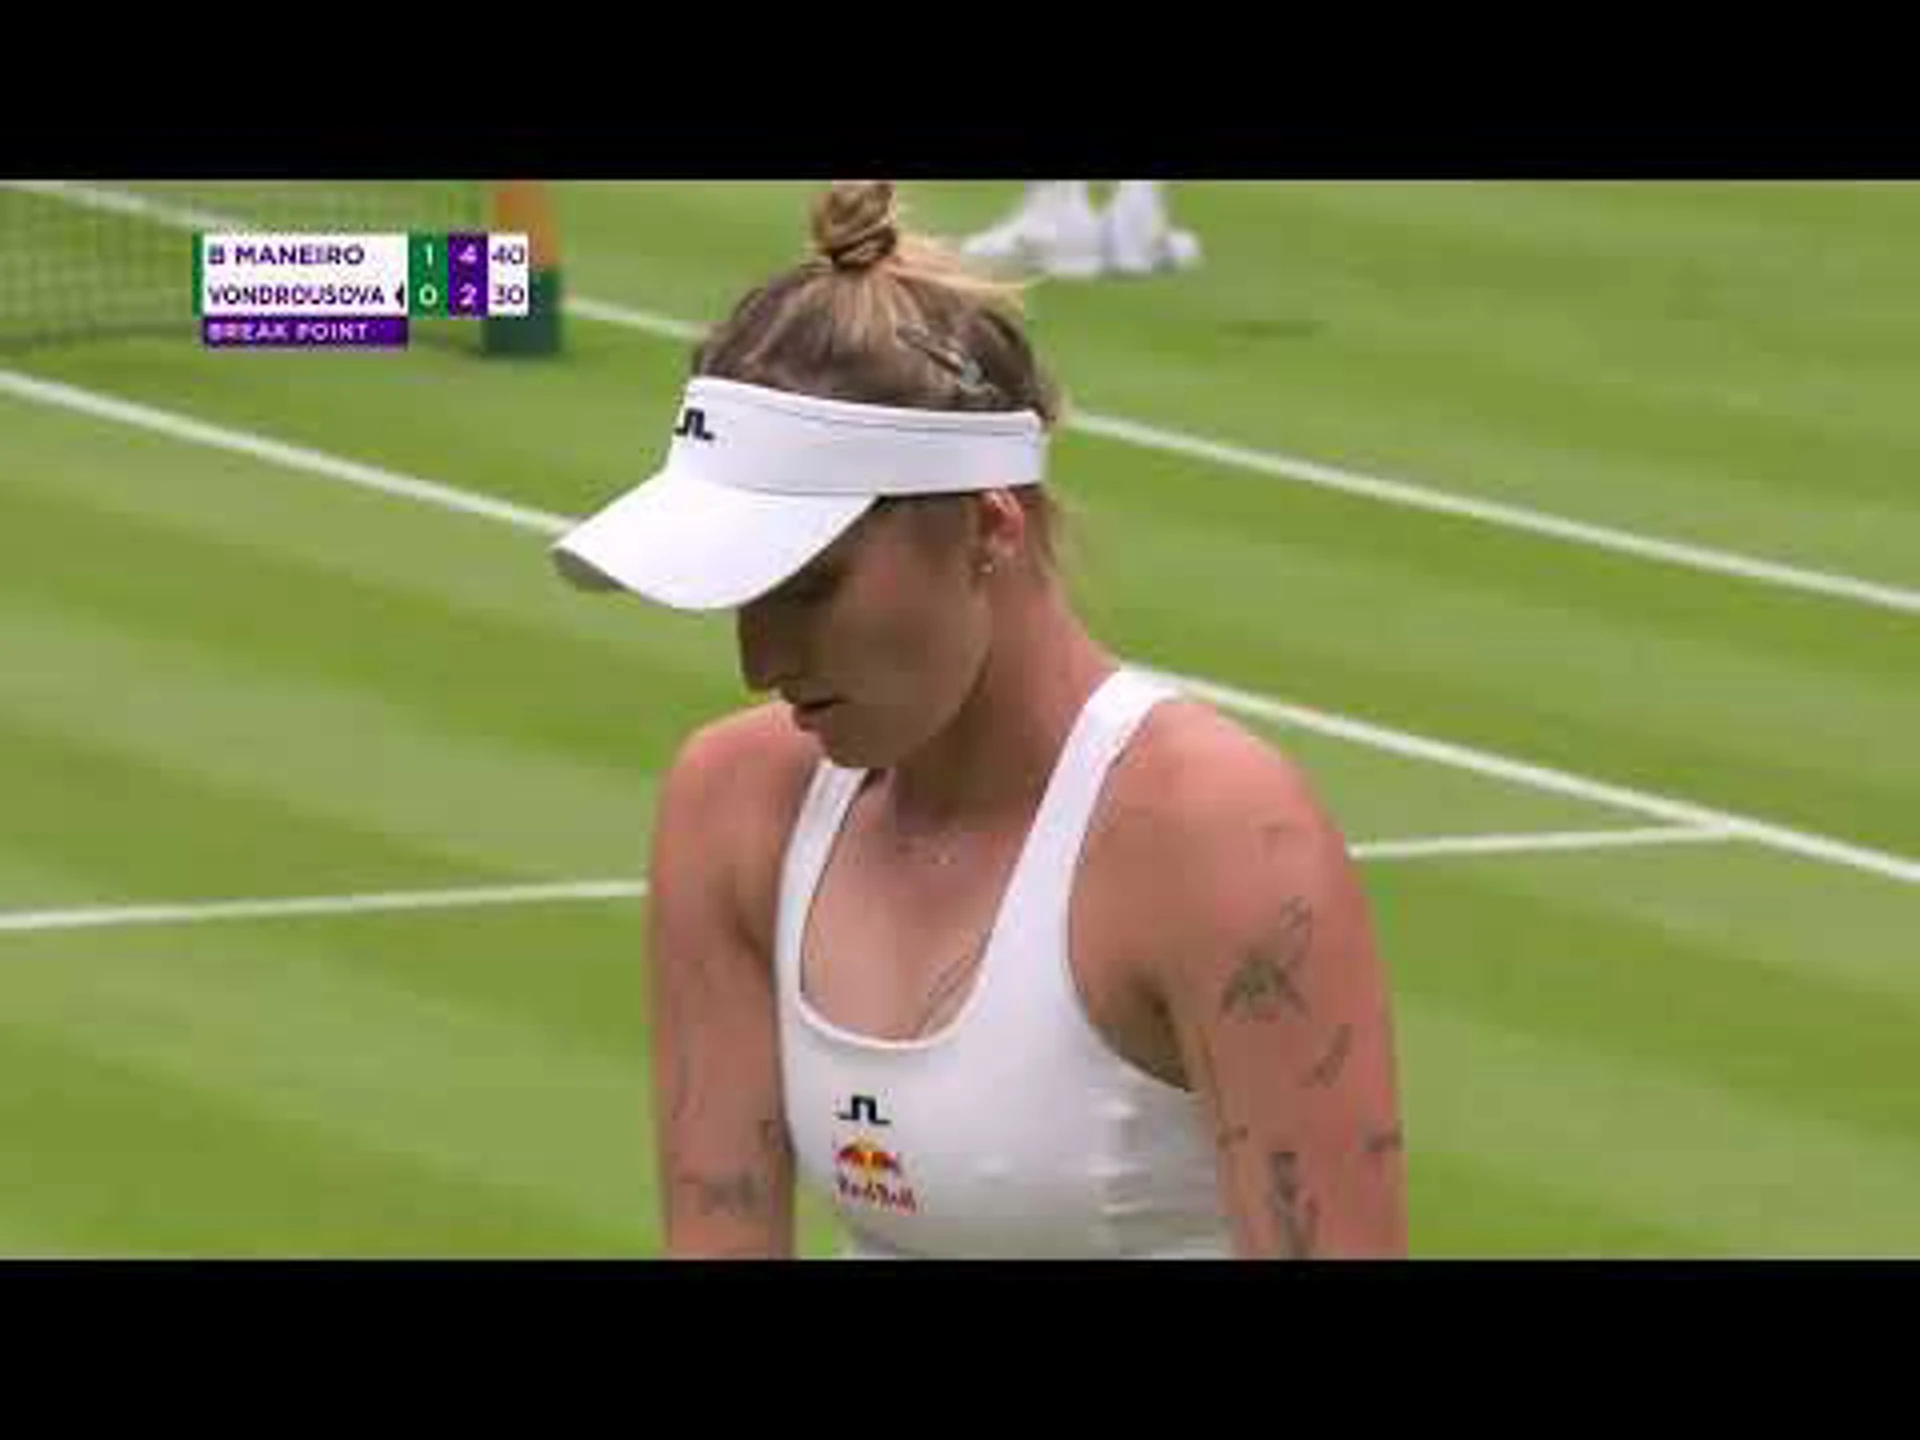 Jessica Bouzas Maneiro v Marketa Vondrousova | Match Highlights | Wimbledon